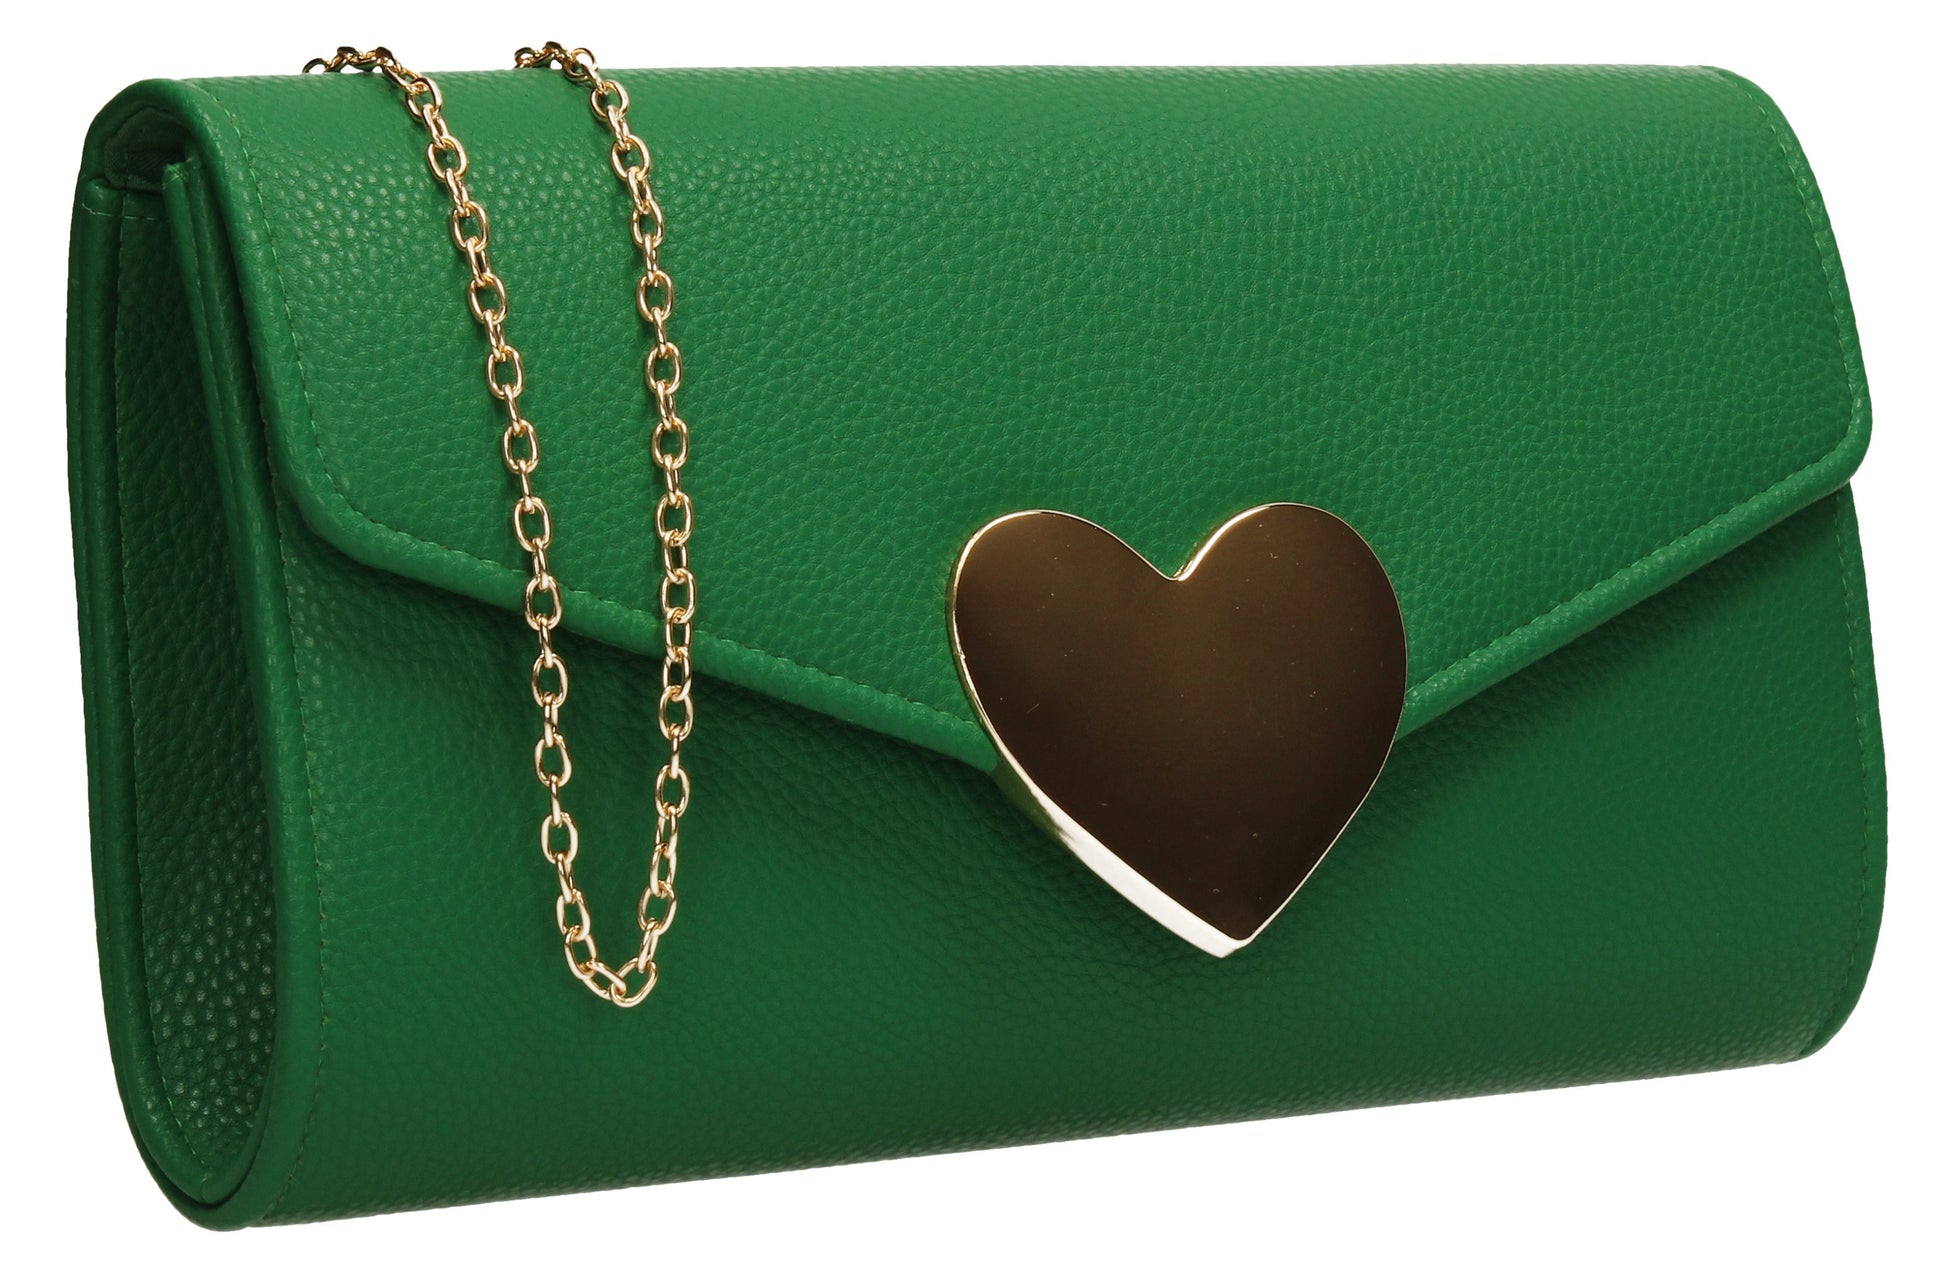 SWANKYSWANS Corrie Heart Clutch Bag Green Cute Cheap Clutch Bag For Weddings School and Work